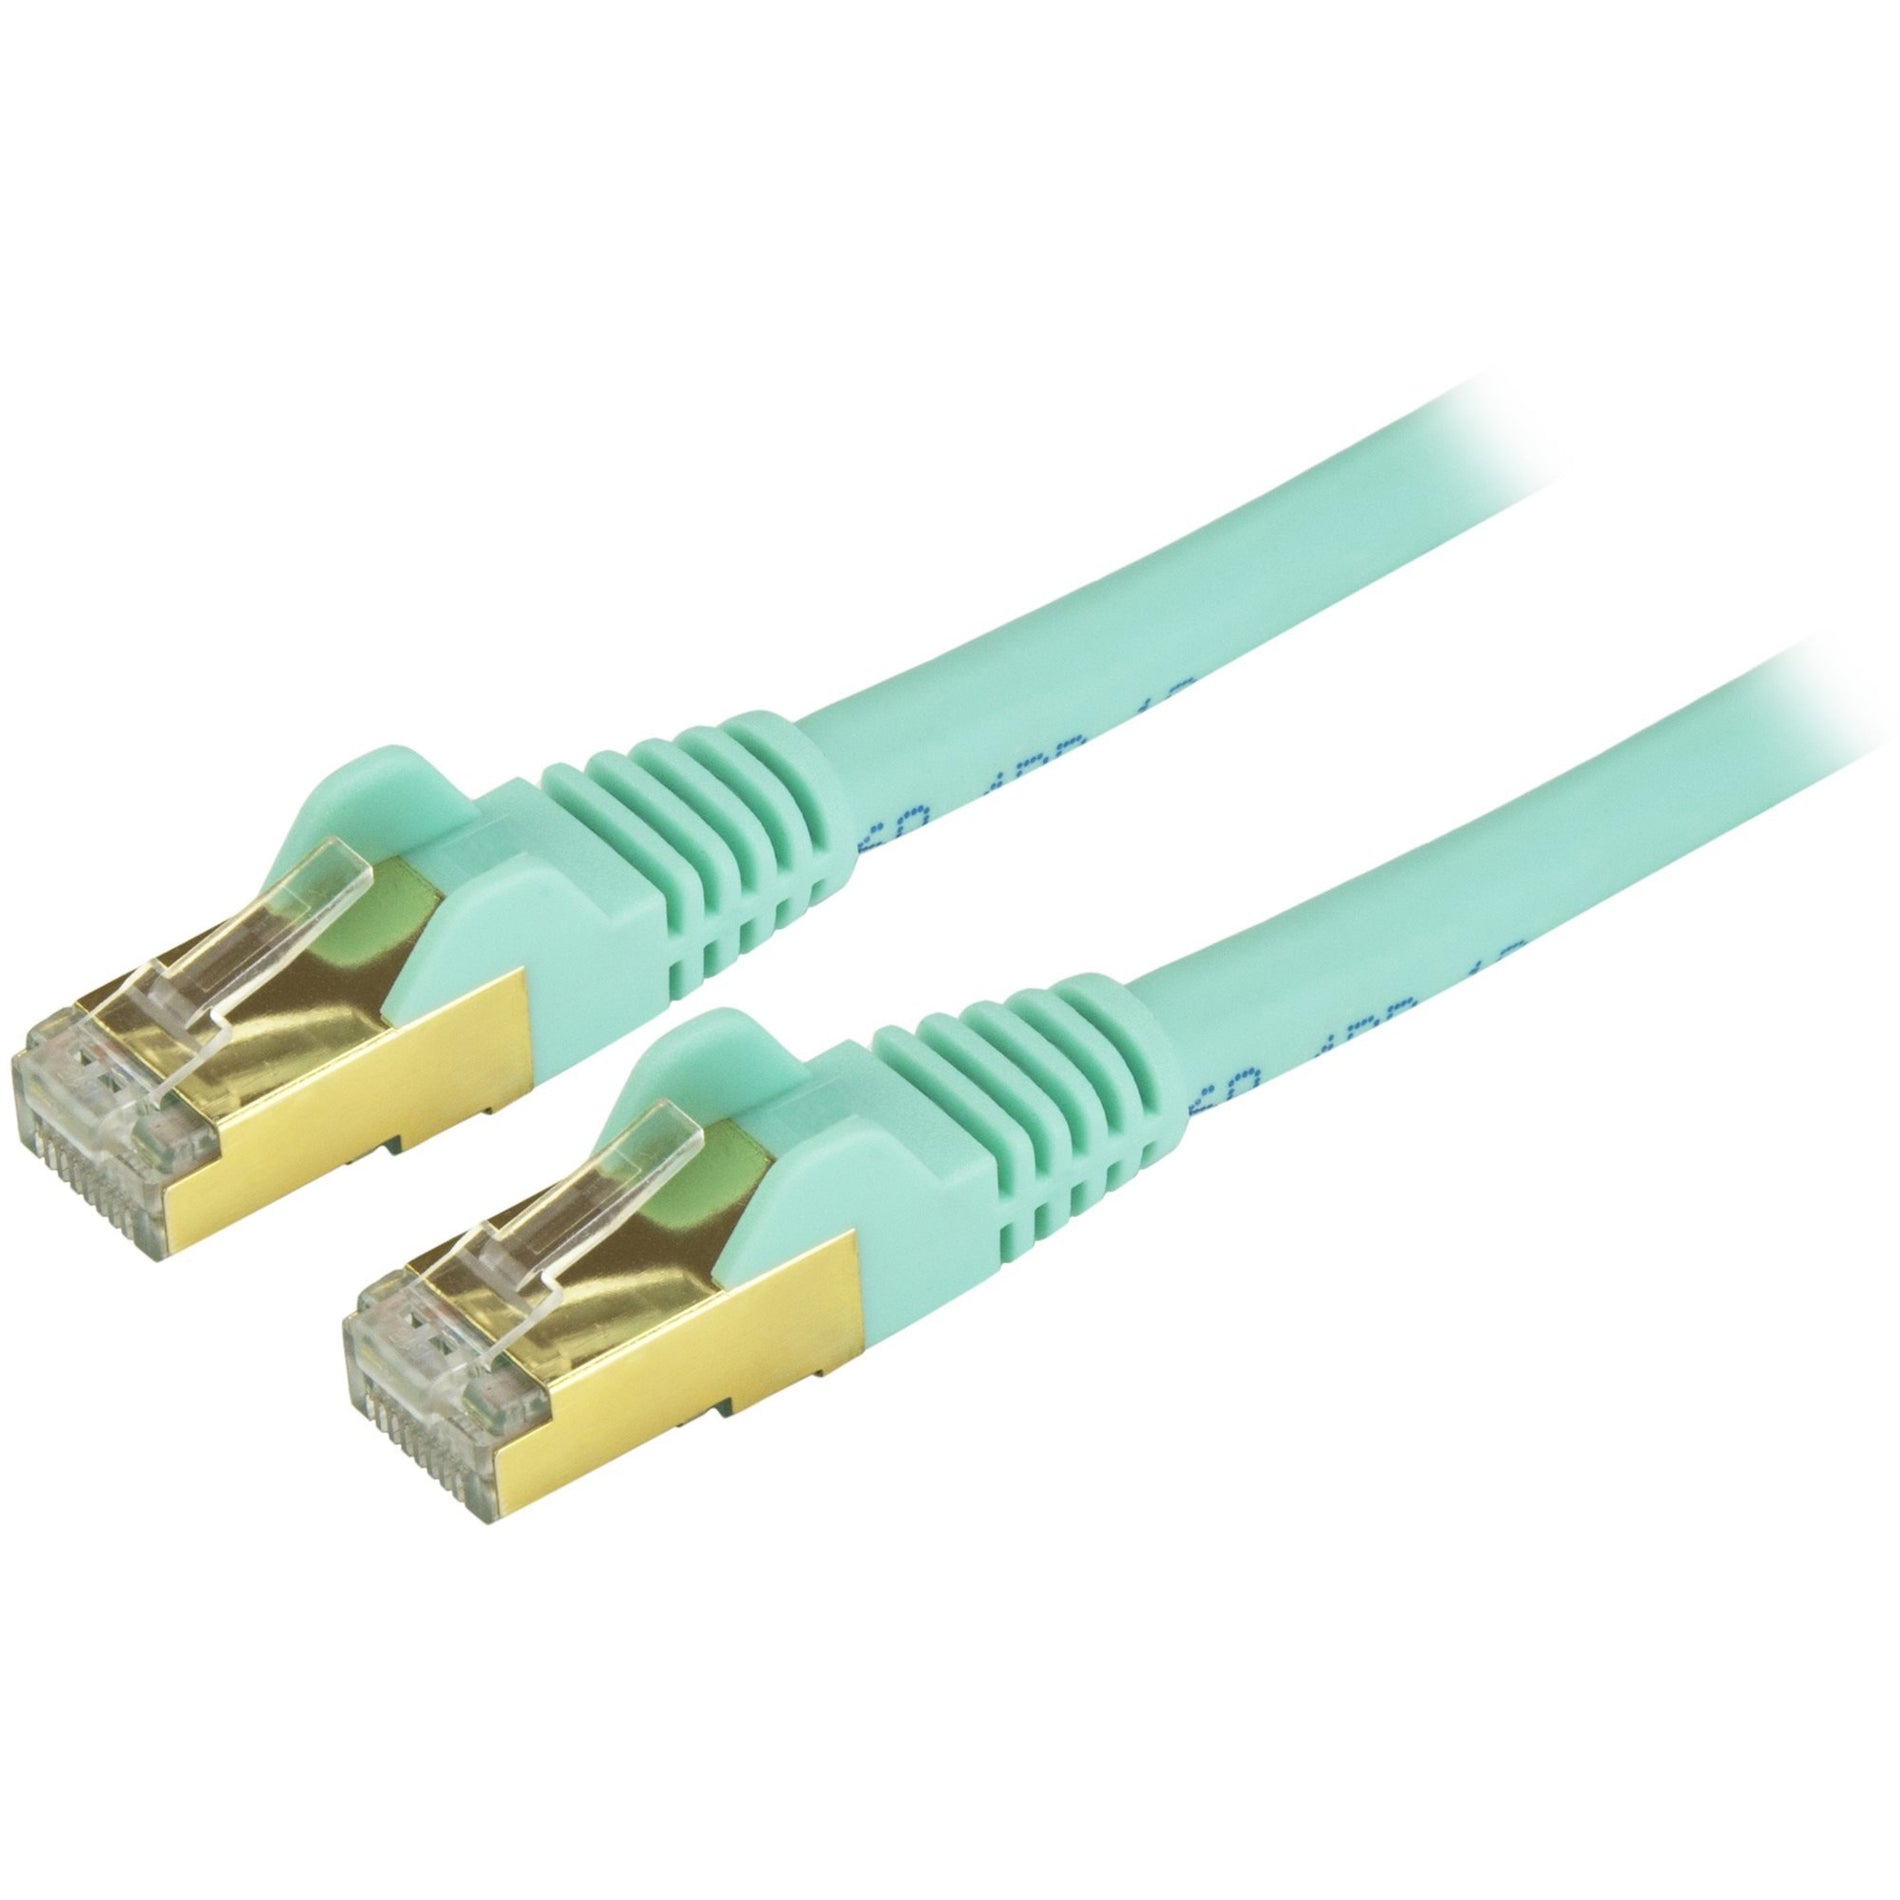 StarTech.com C6ASPAT2AQ Cat6a Ethernet Patch Cable - Shielded (STP) - 2 ft., Aqua, Snagless RJ45 Ethernet Cord